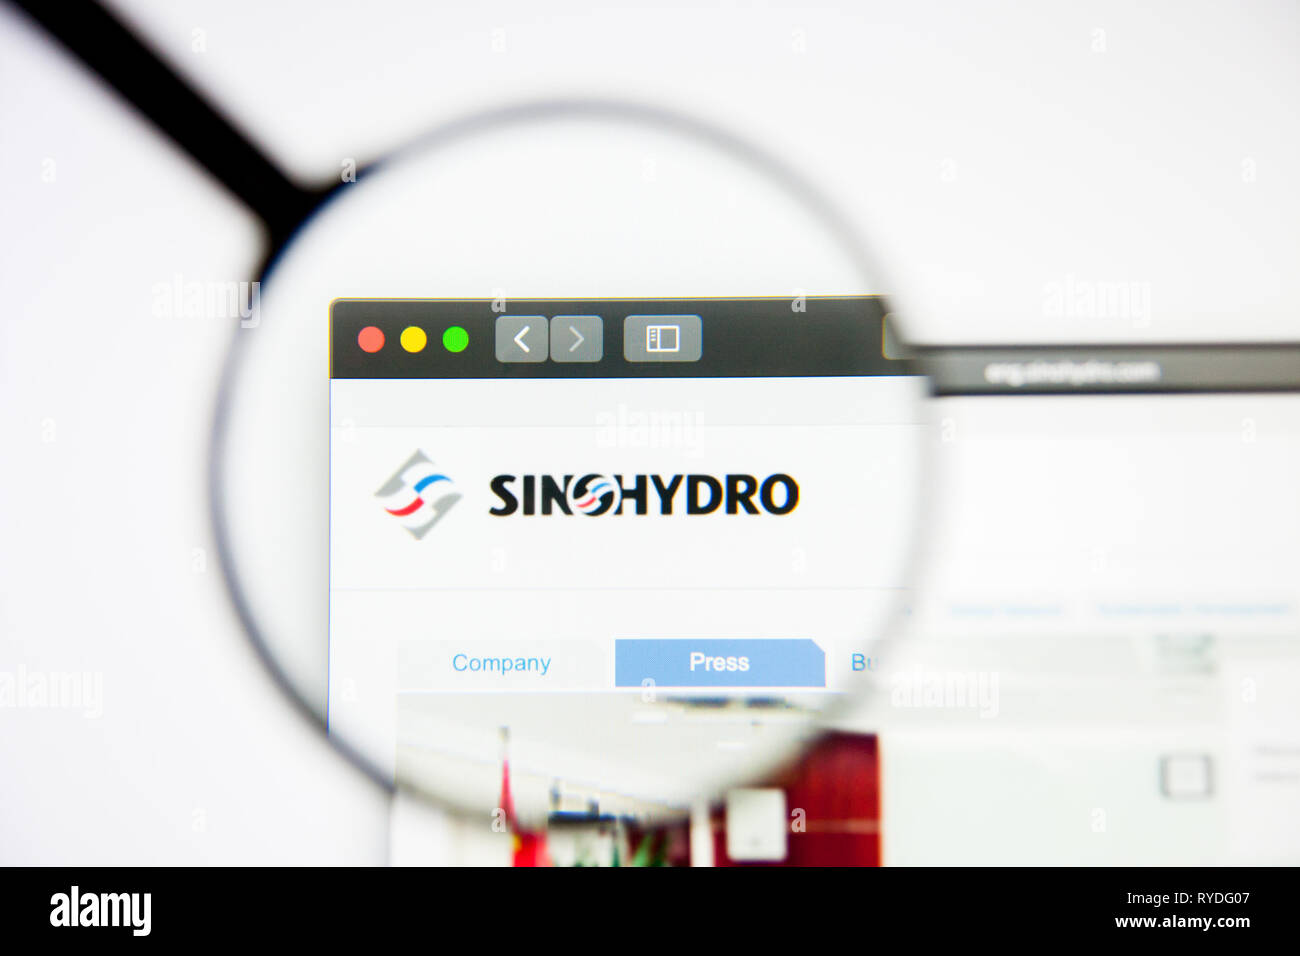 Los Angeles, Kalifornien, USA - 5. März 2019: sinohydro Group Website Homepage. Sinohydro Gruppe Logo sichtbar auf dem Display, Illustrative Editorial Stockfoto